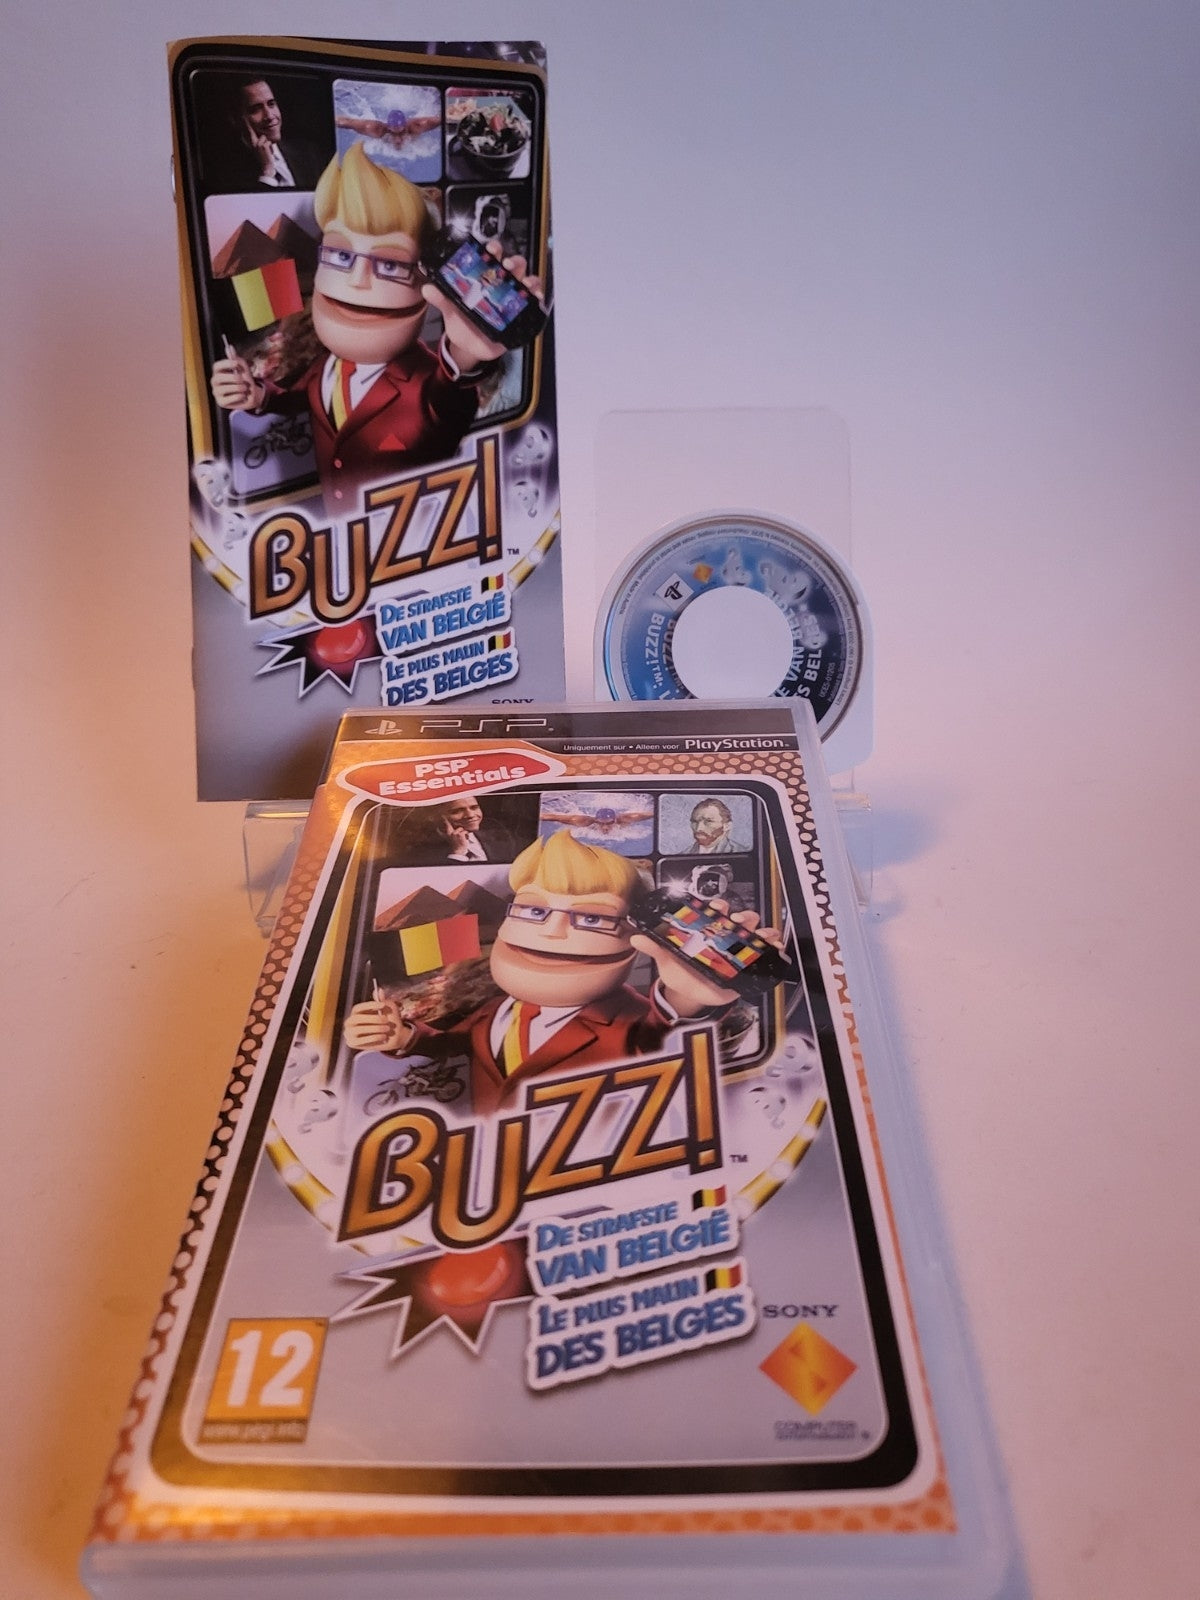 Buzz! De Strafste van Belgie Essentials Playstation Portable